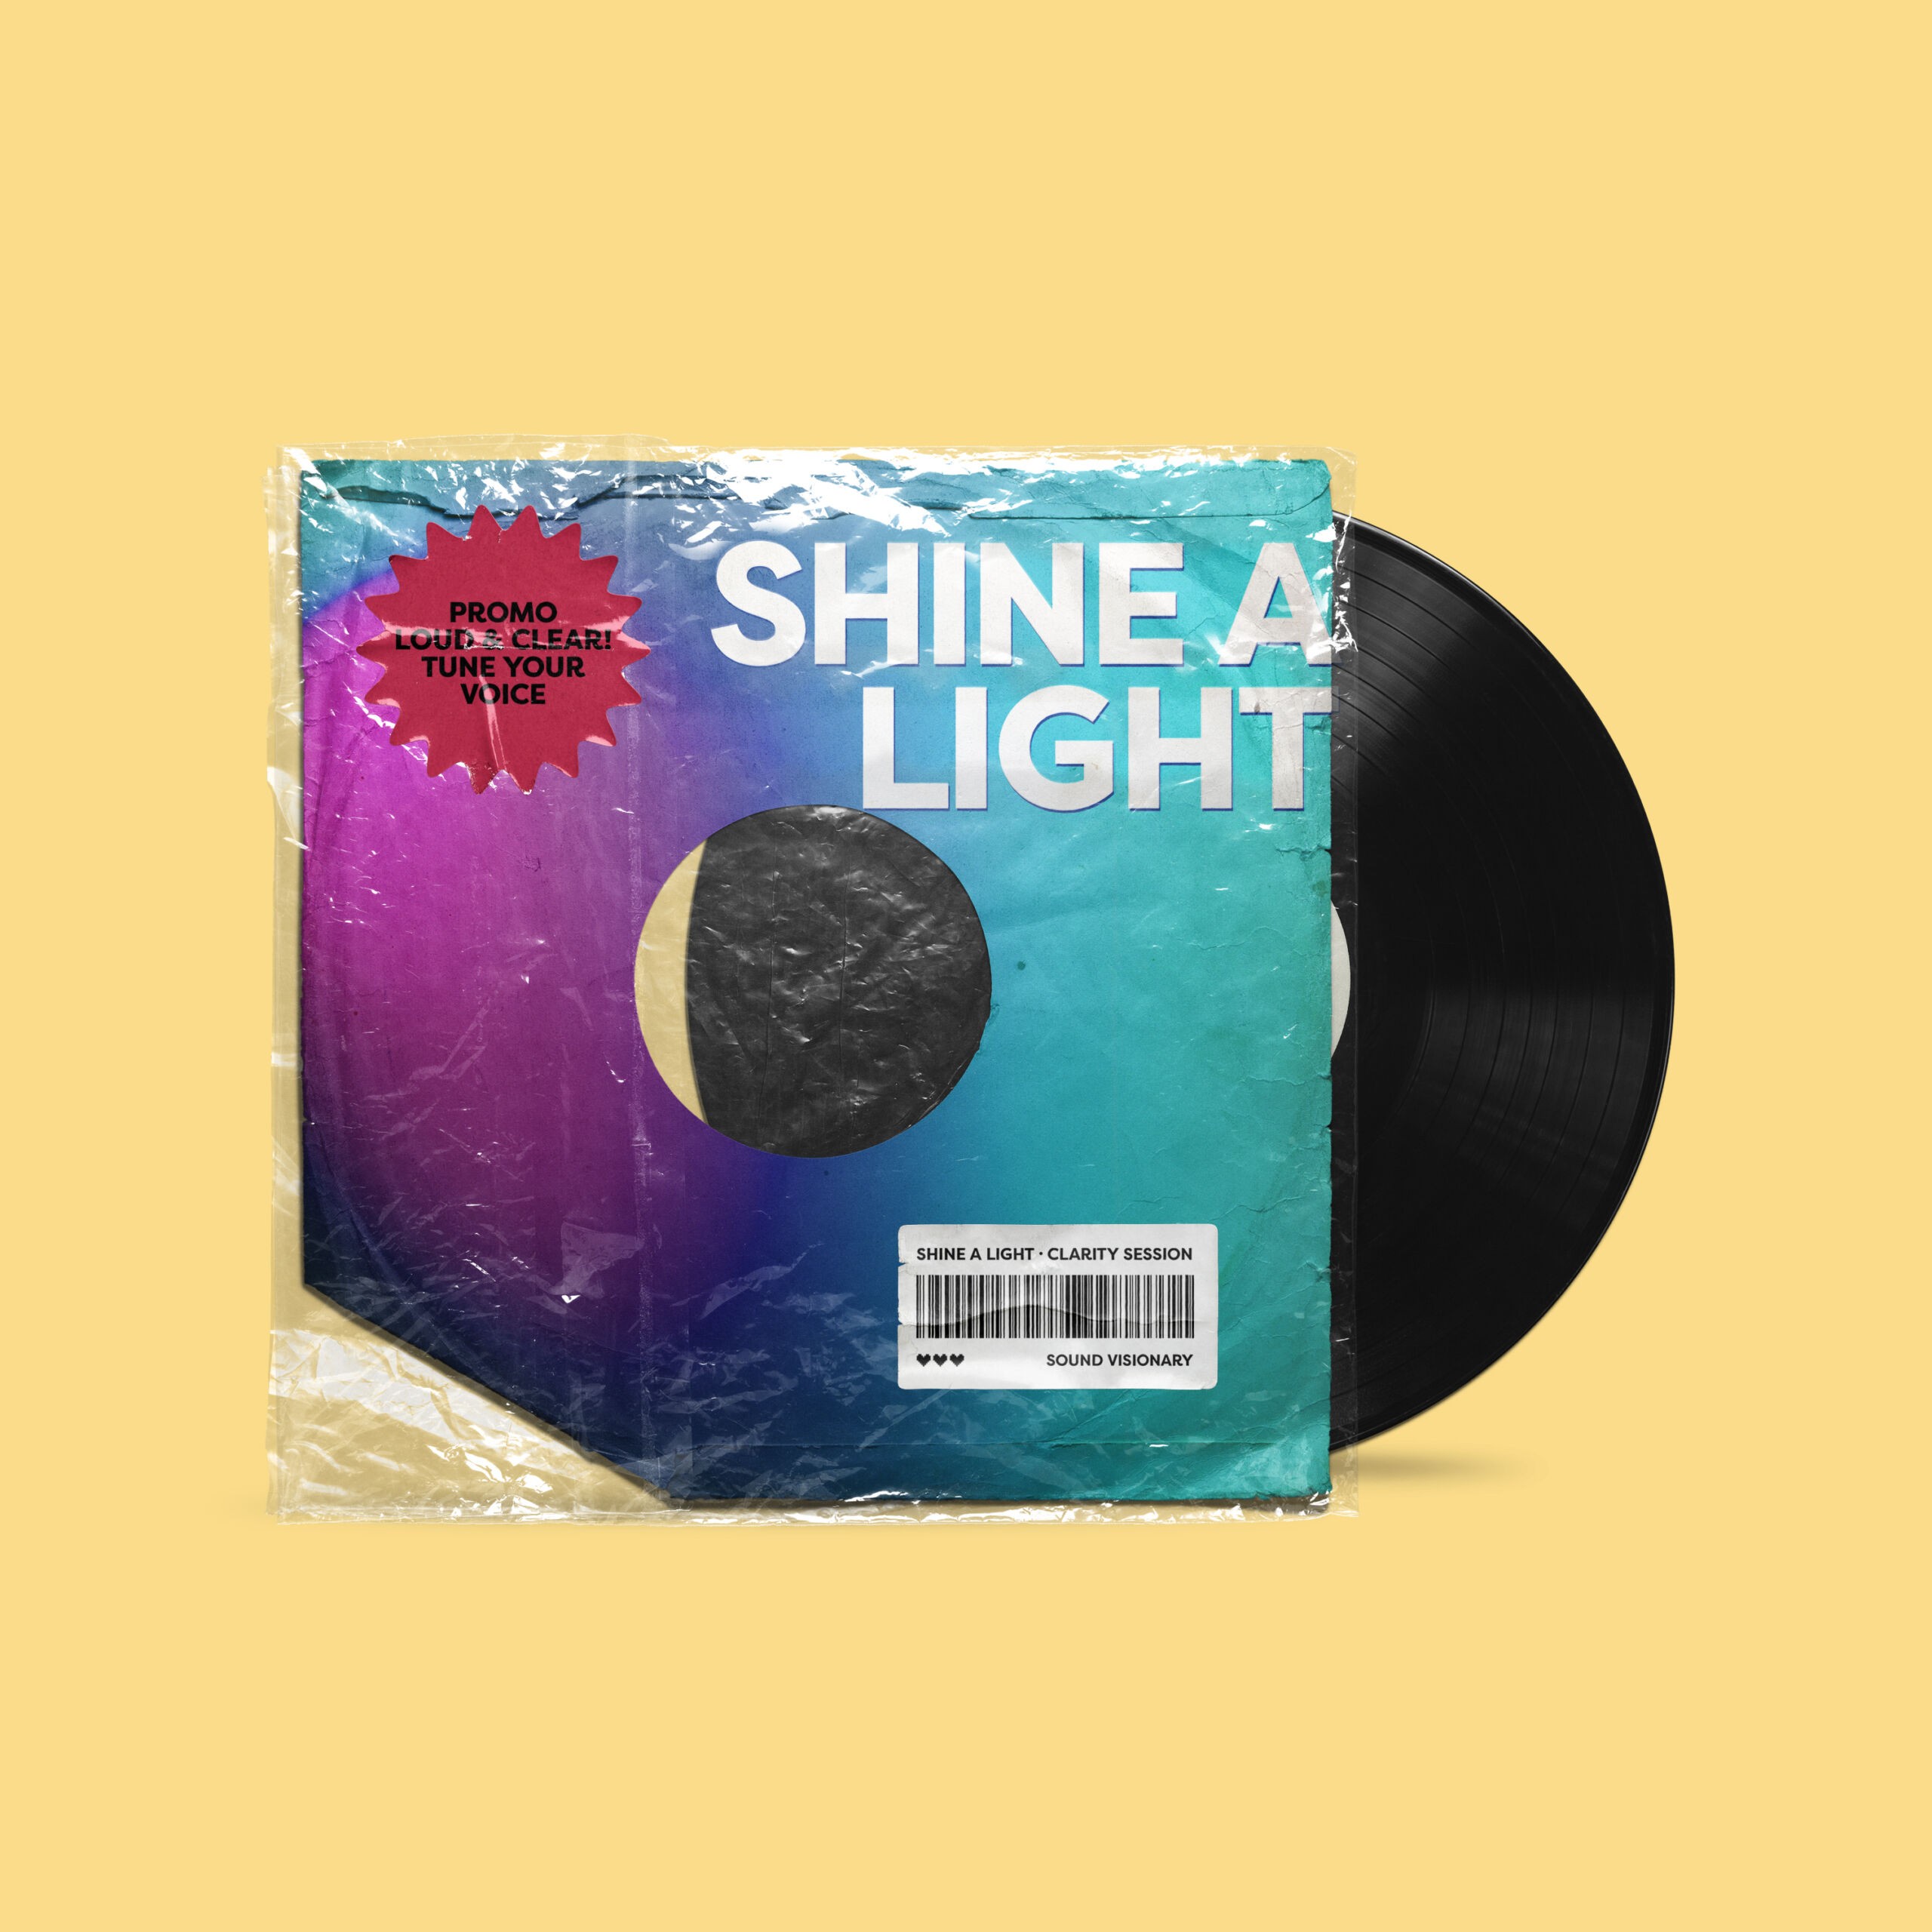 Music branding clarity session - Shine a light